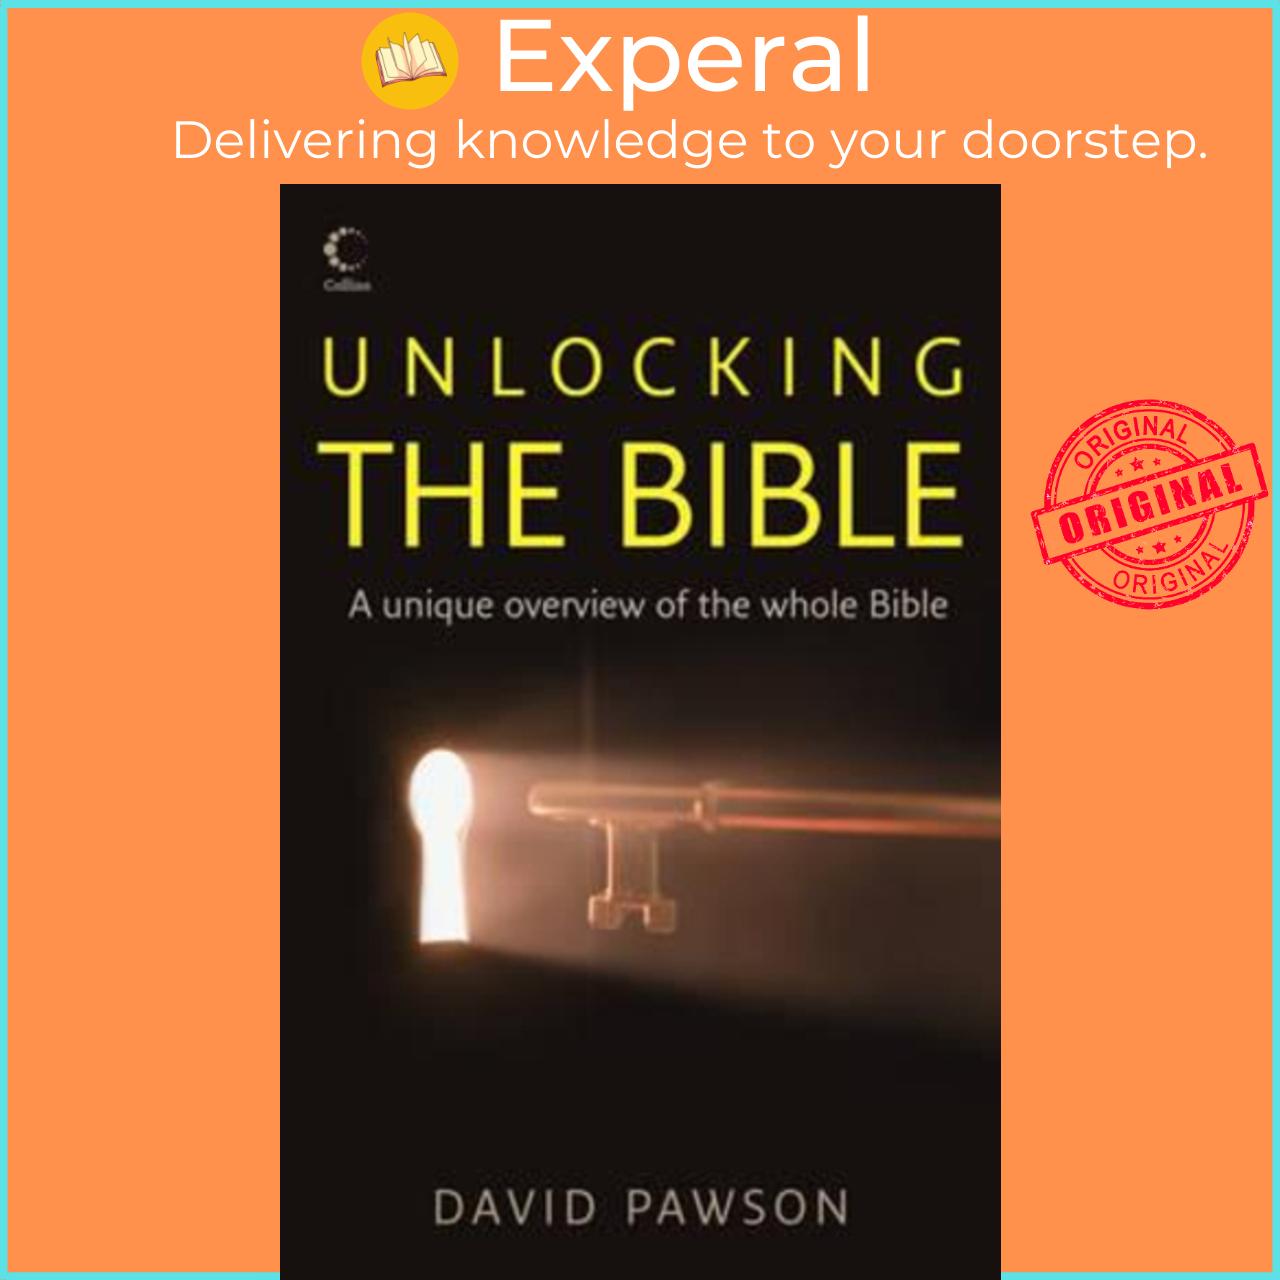 Sách - Unlocking the Bible by David Pawson (UK edition, paperback)